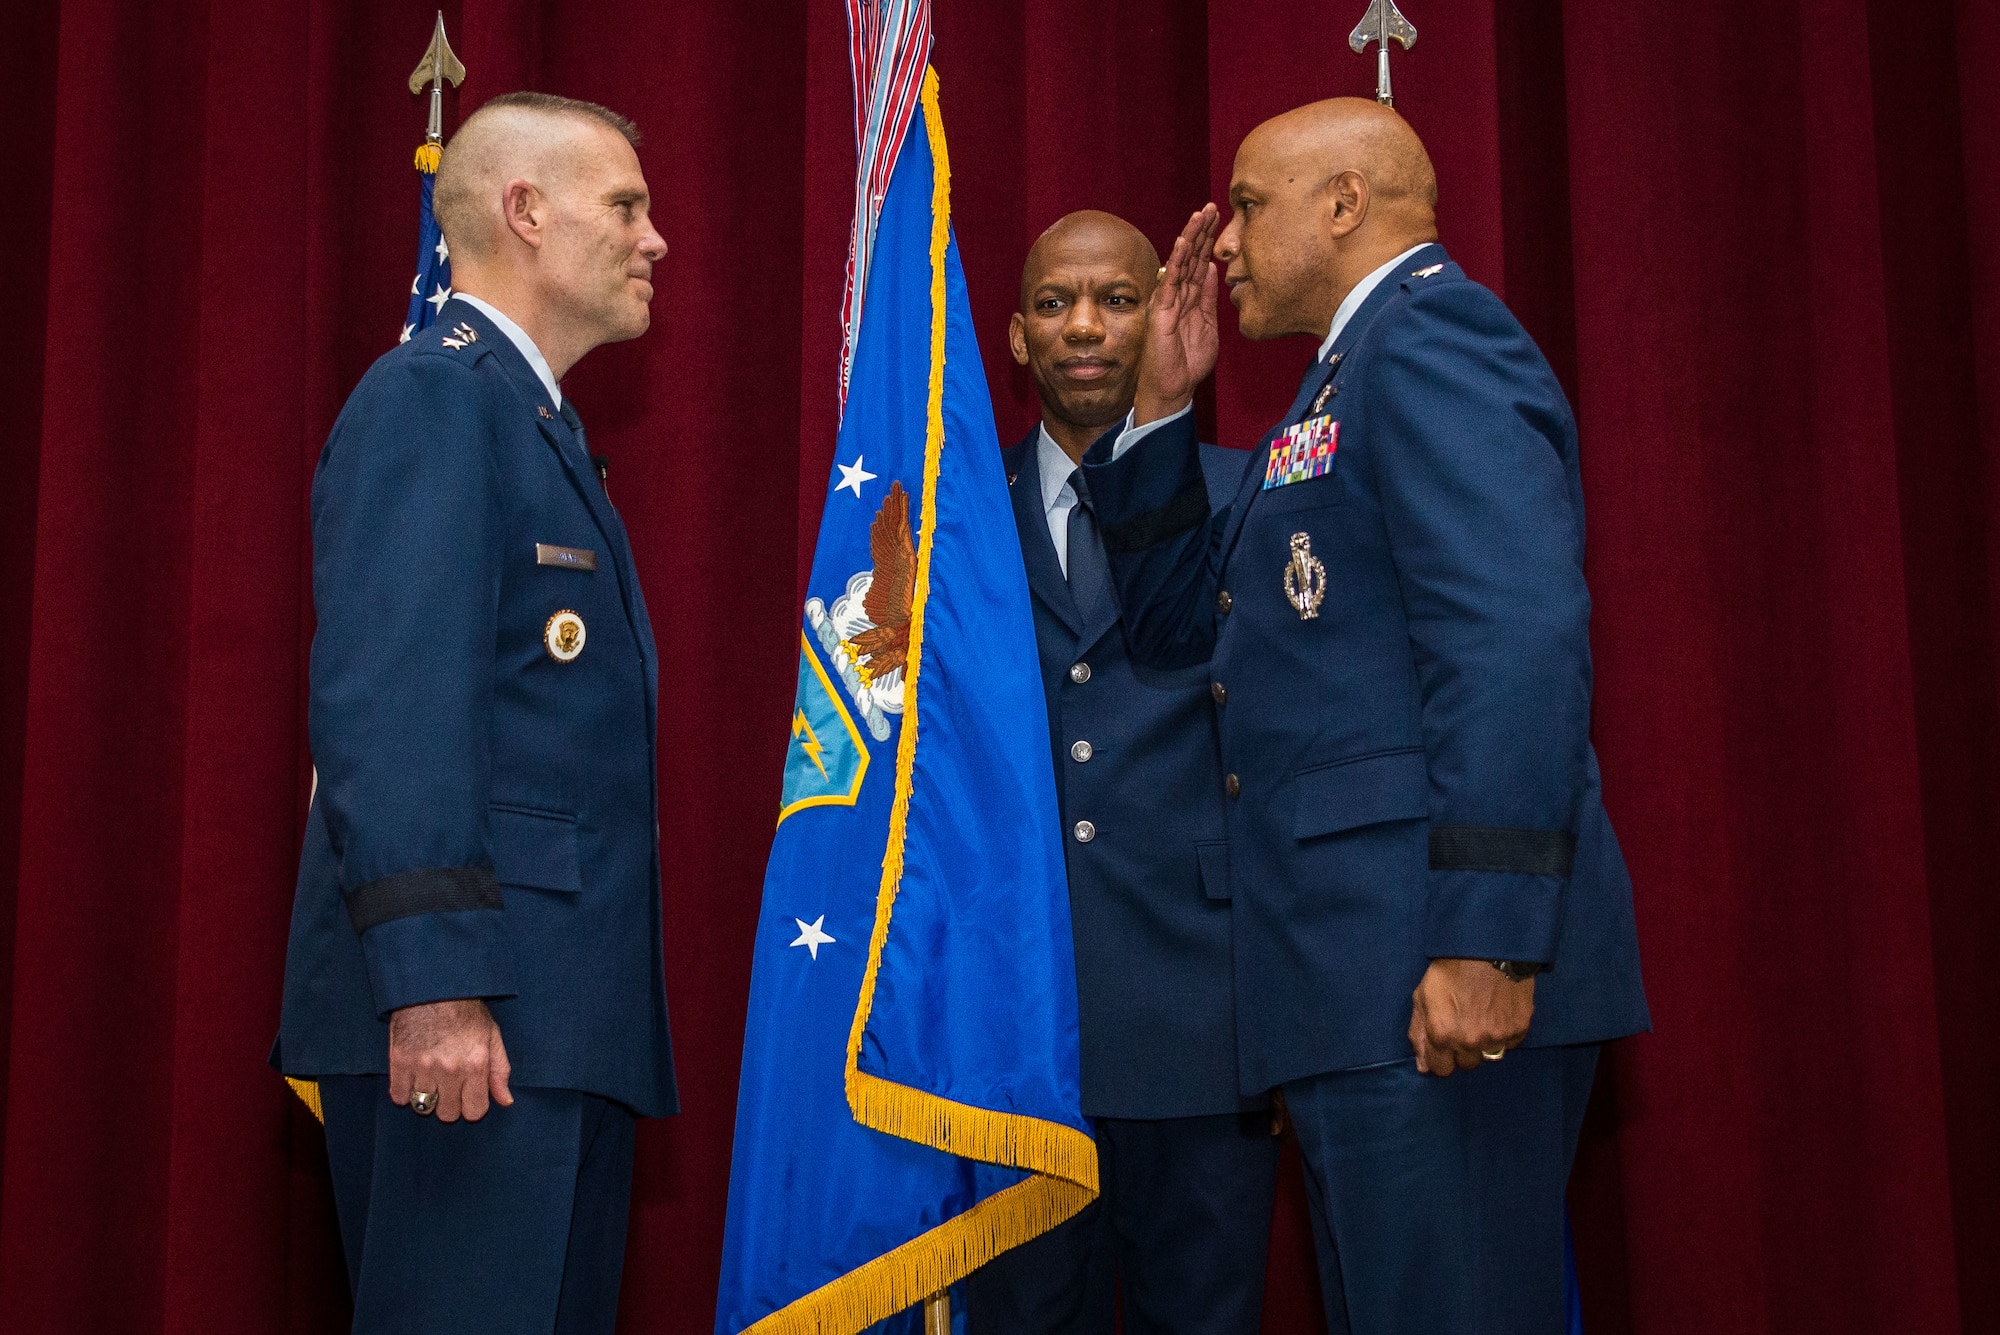 Lt. Gen. Cotton assumes command of Air University